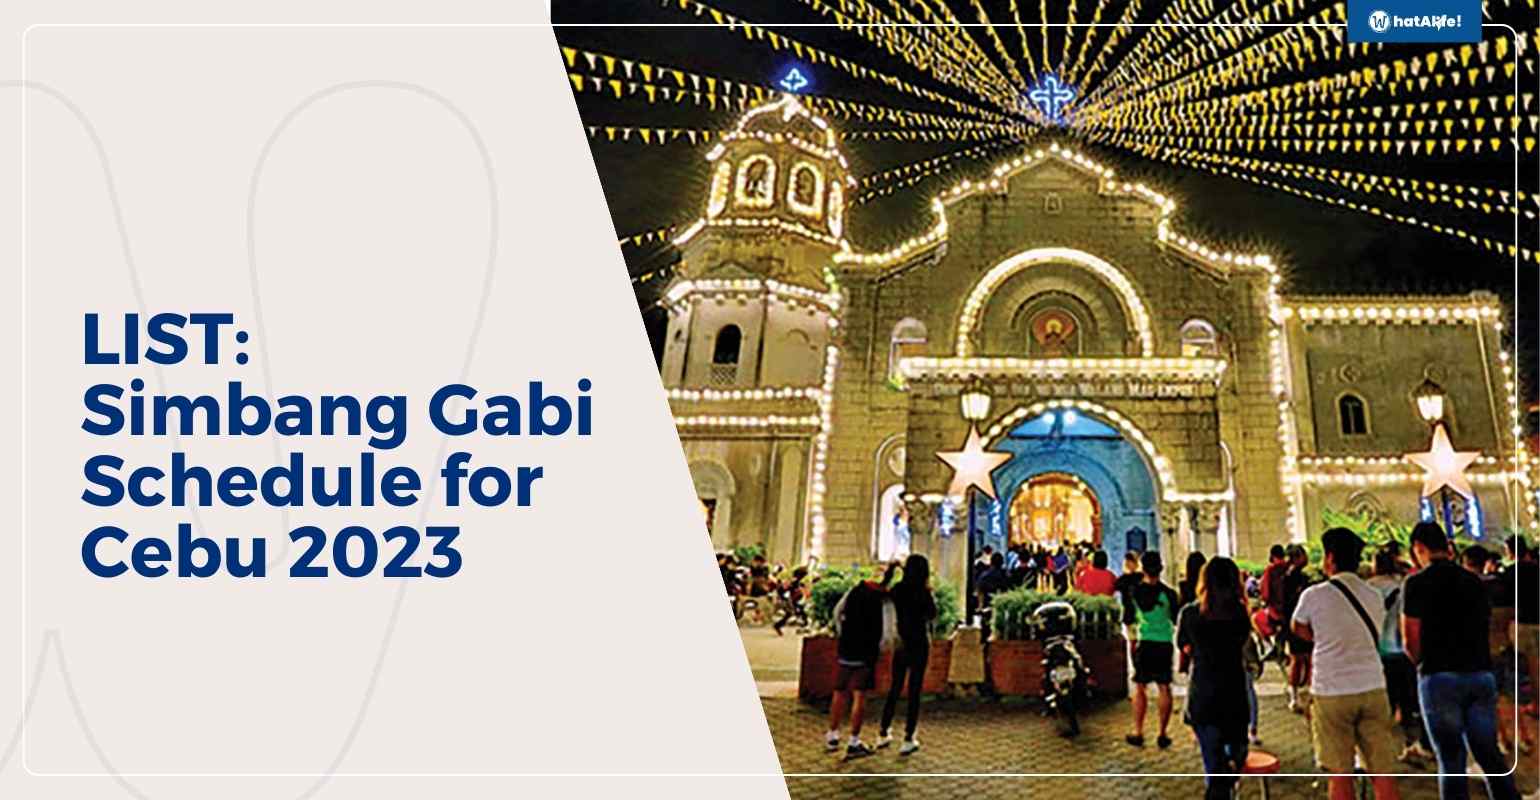 list simbang gabi schedule for cebu 2023